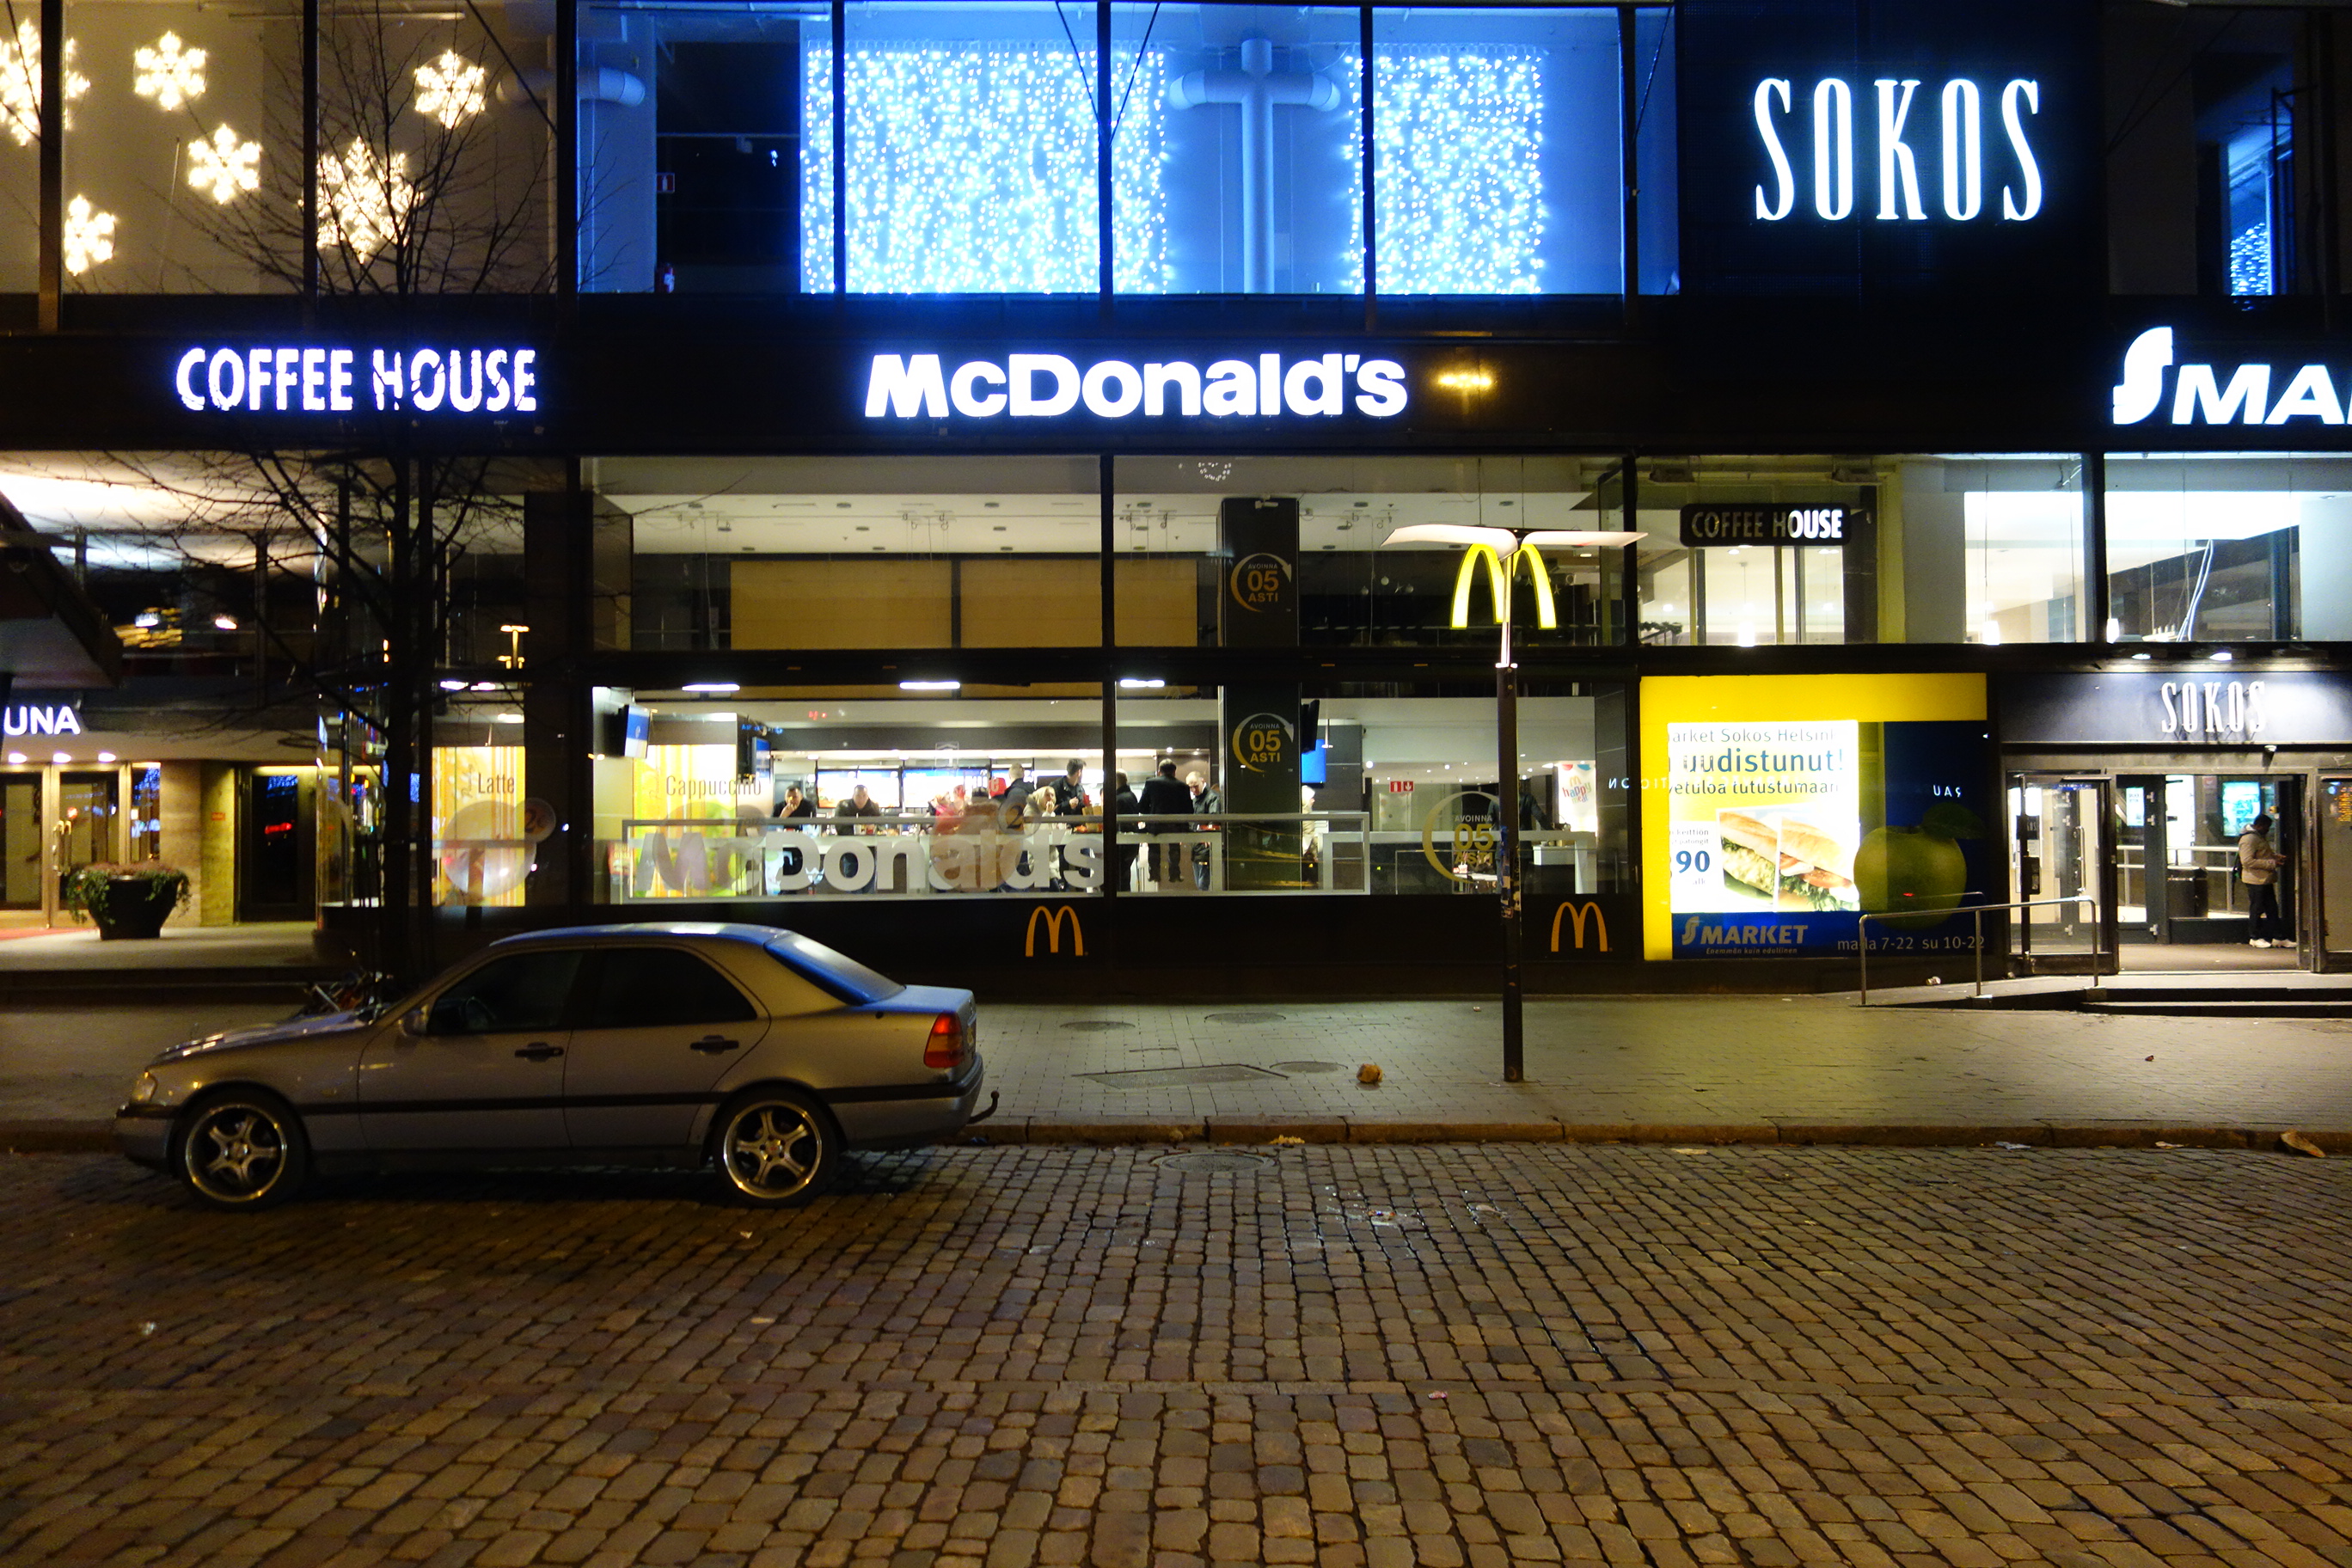 The 24-hours McDonald's